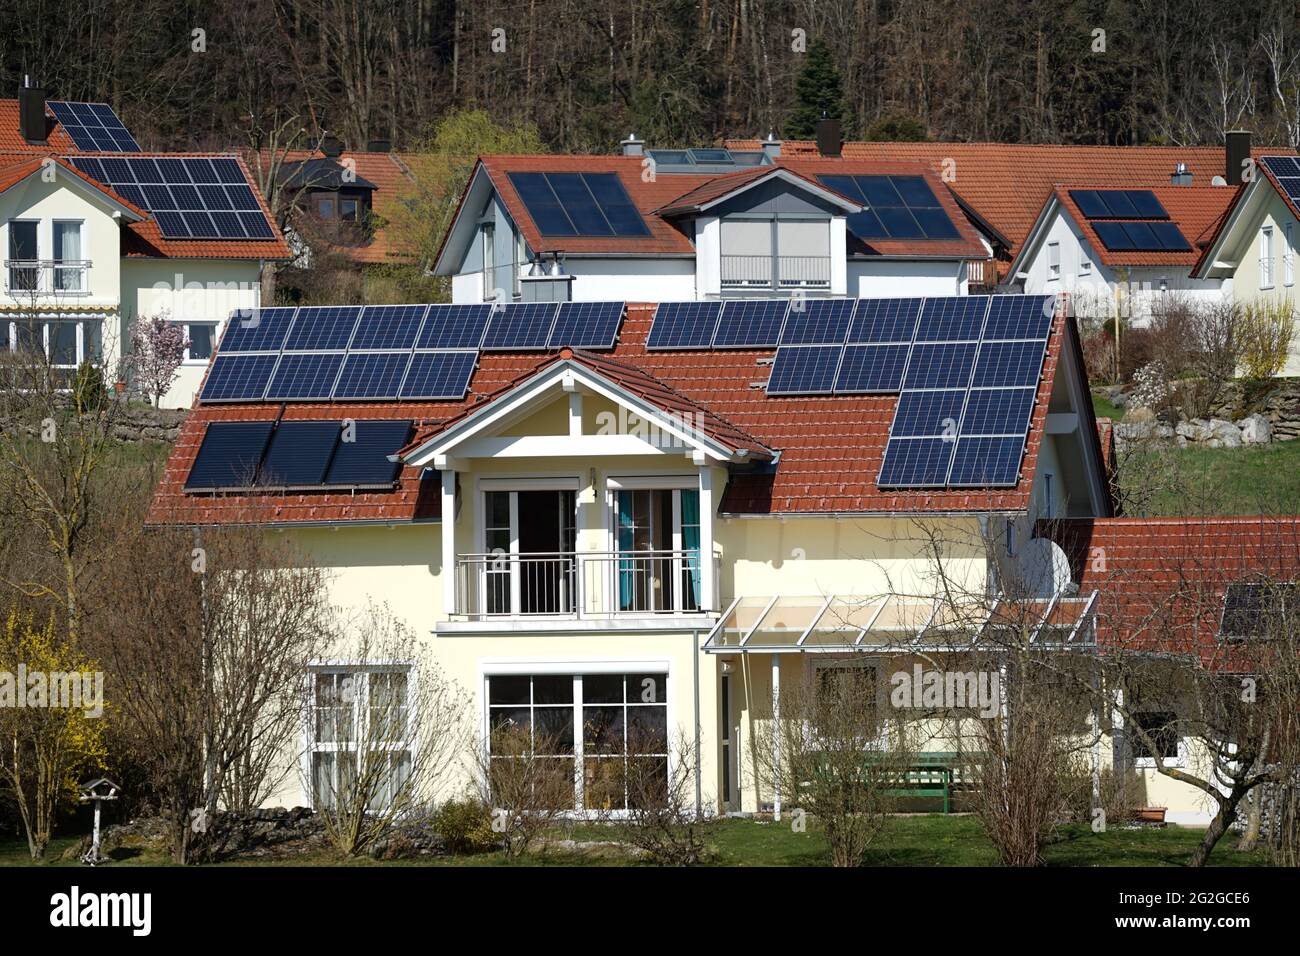 Germany, Bavaria, Upper Bavaria, Burghausen, single-family houses with photovoltaic systems Stock Photo